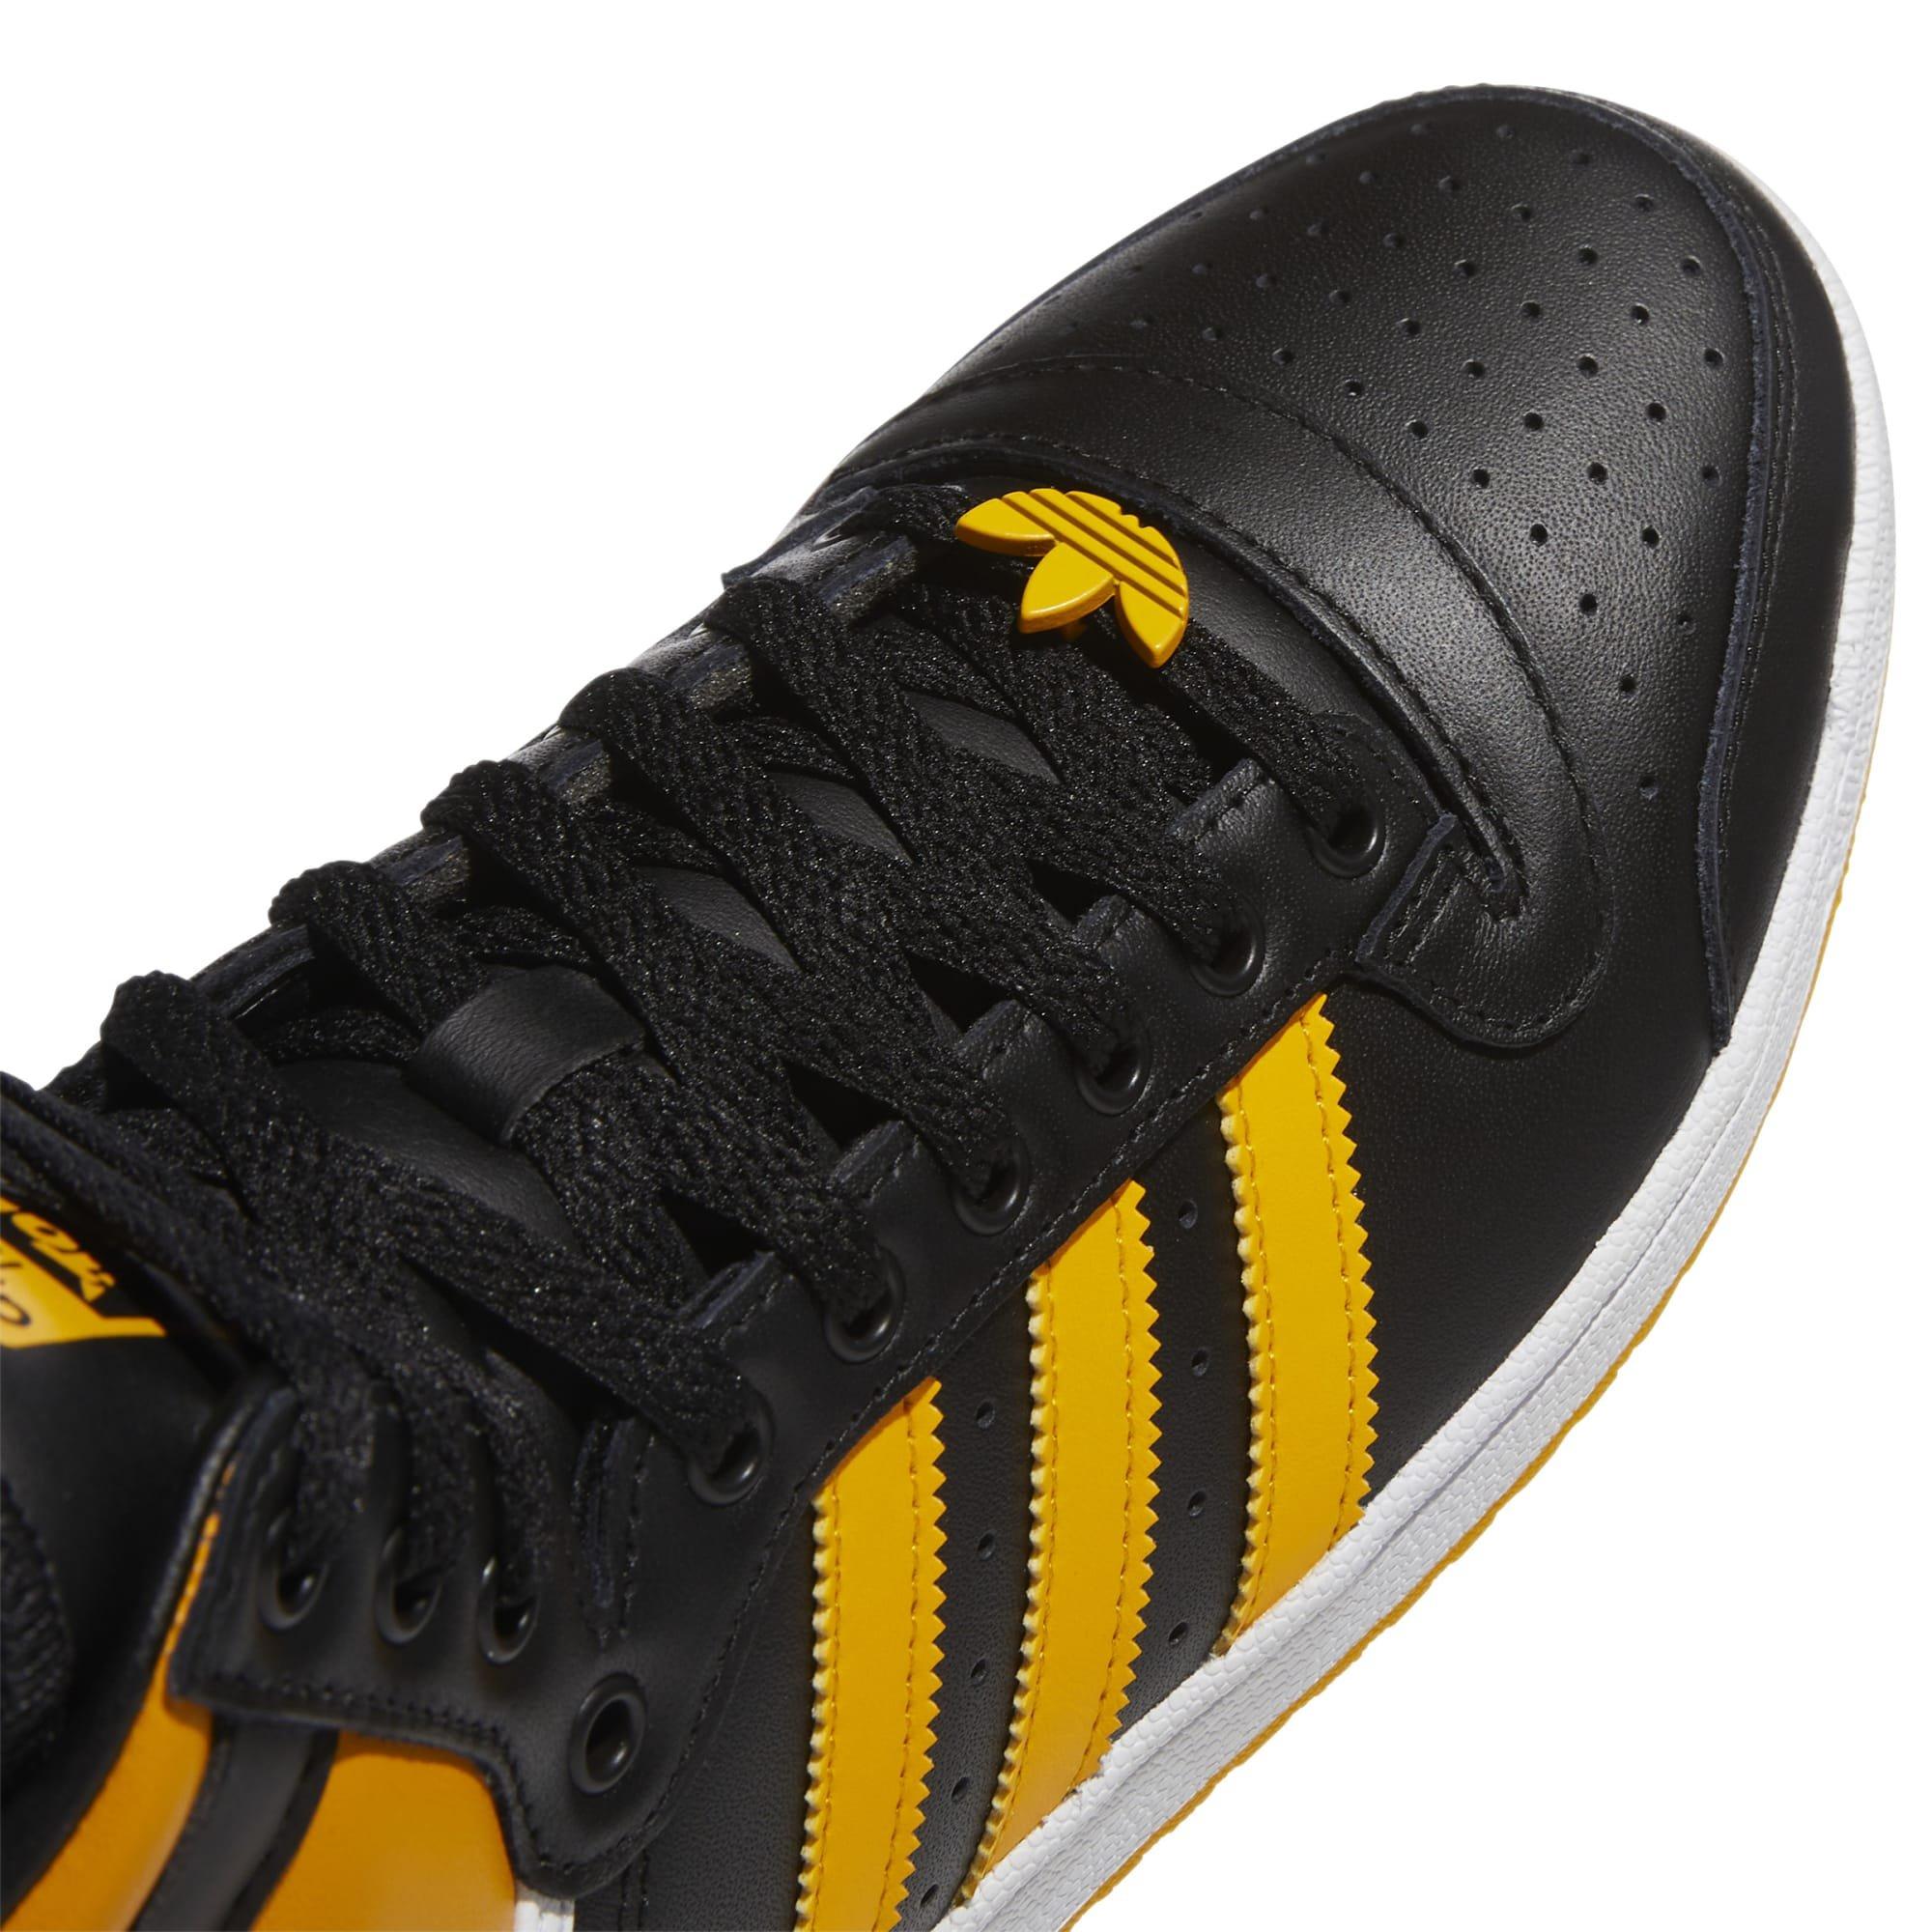 adidas Top Hi "Black/Gold" Men's Shoe